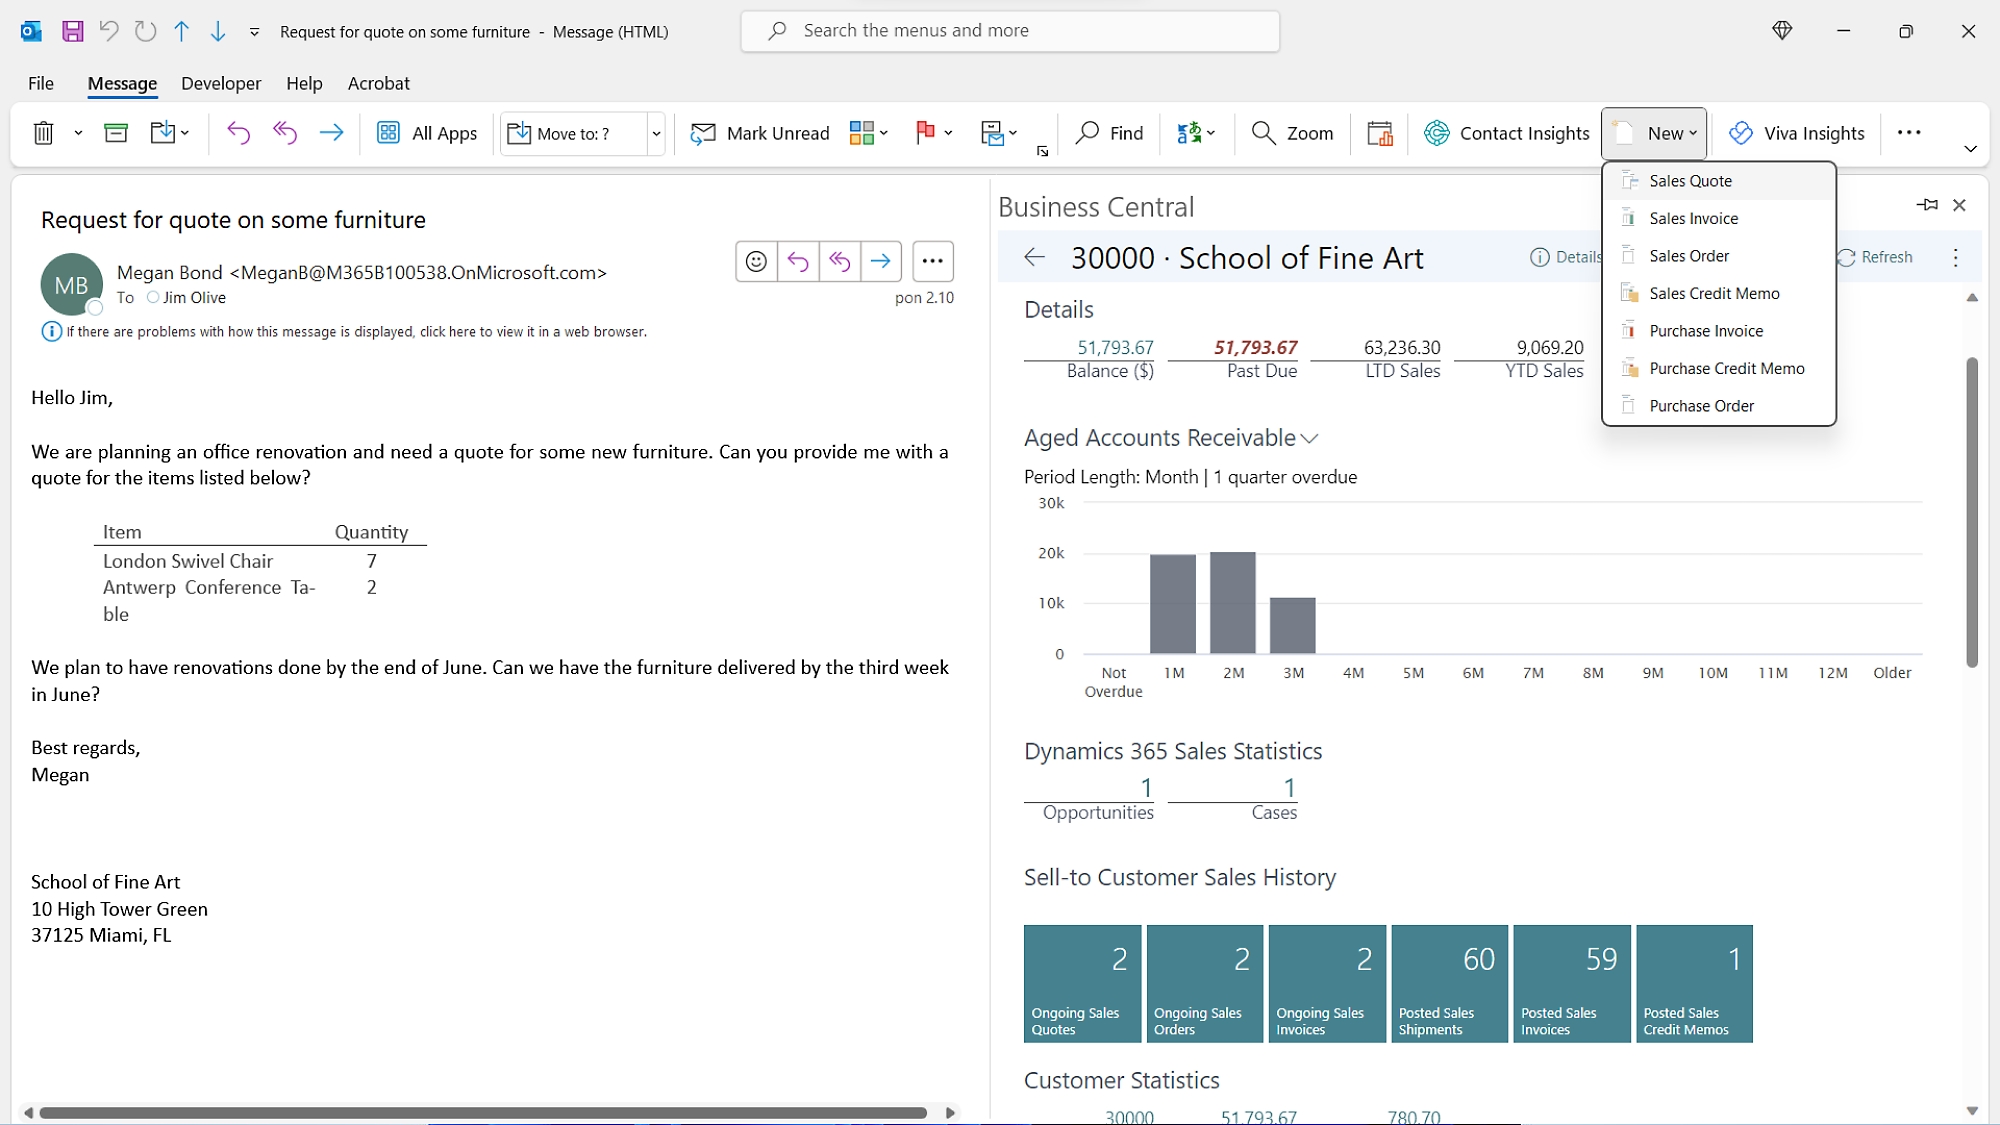 A screen shot of the Microsoft office 365 dashboard.